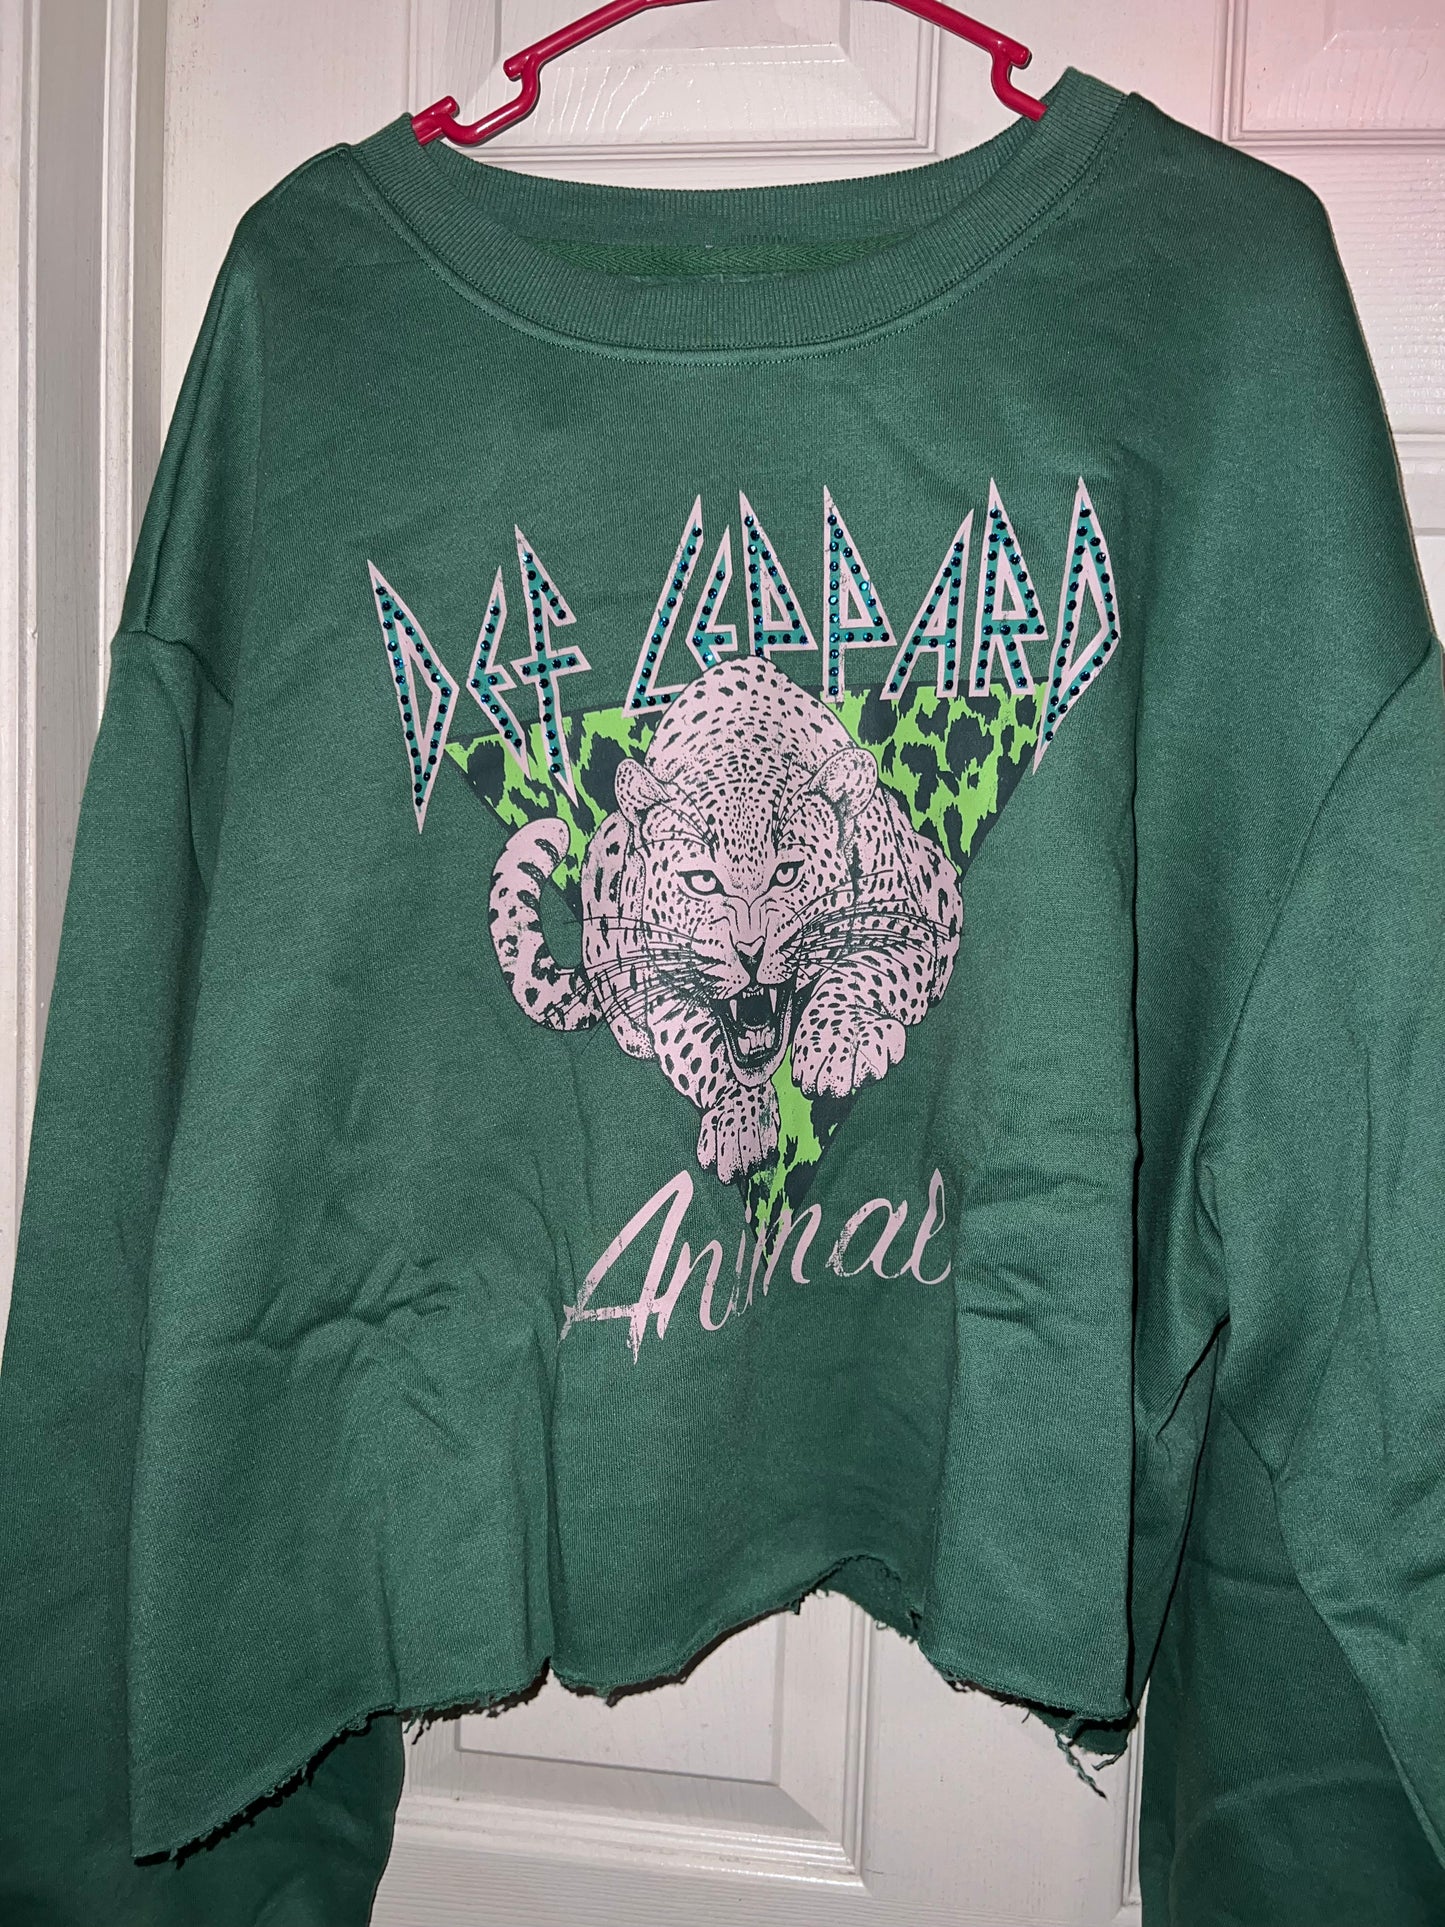 Def Leppard Oversized Distressed Sweatshirt